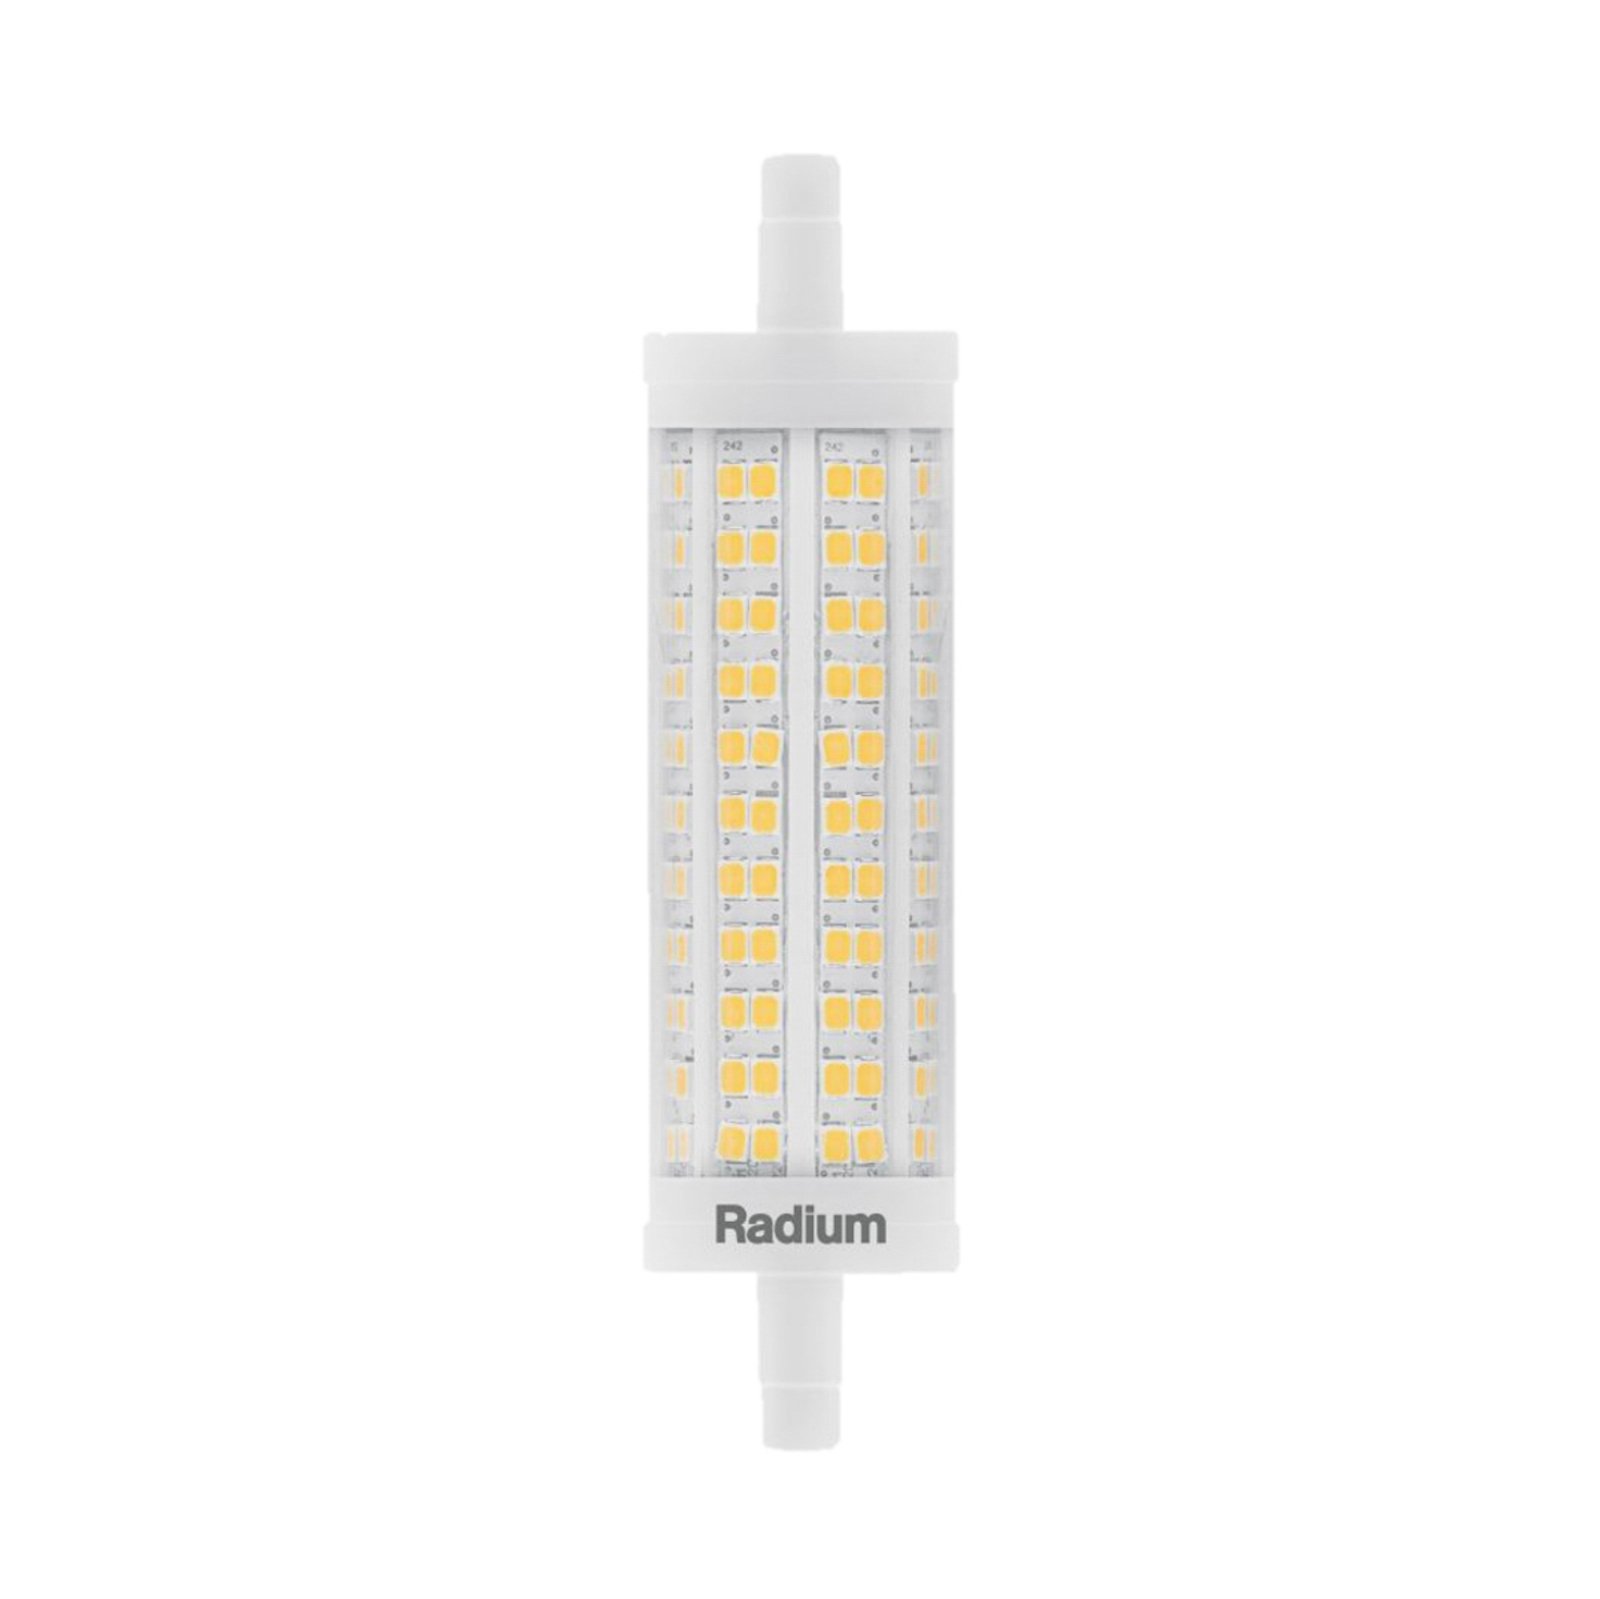 Radium LED Essence tube bulb R7s 17.5 W 2452 lm